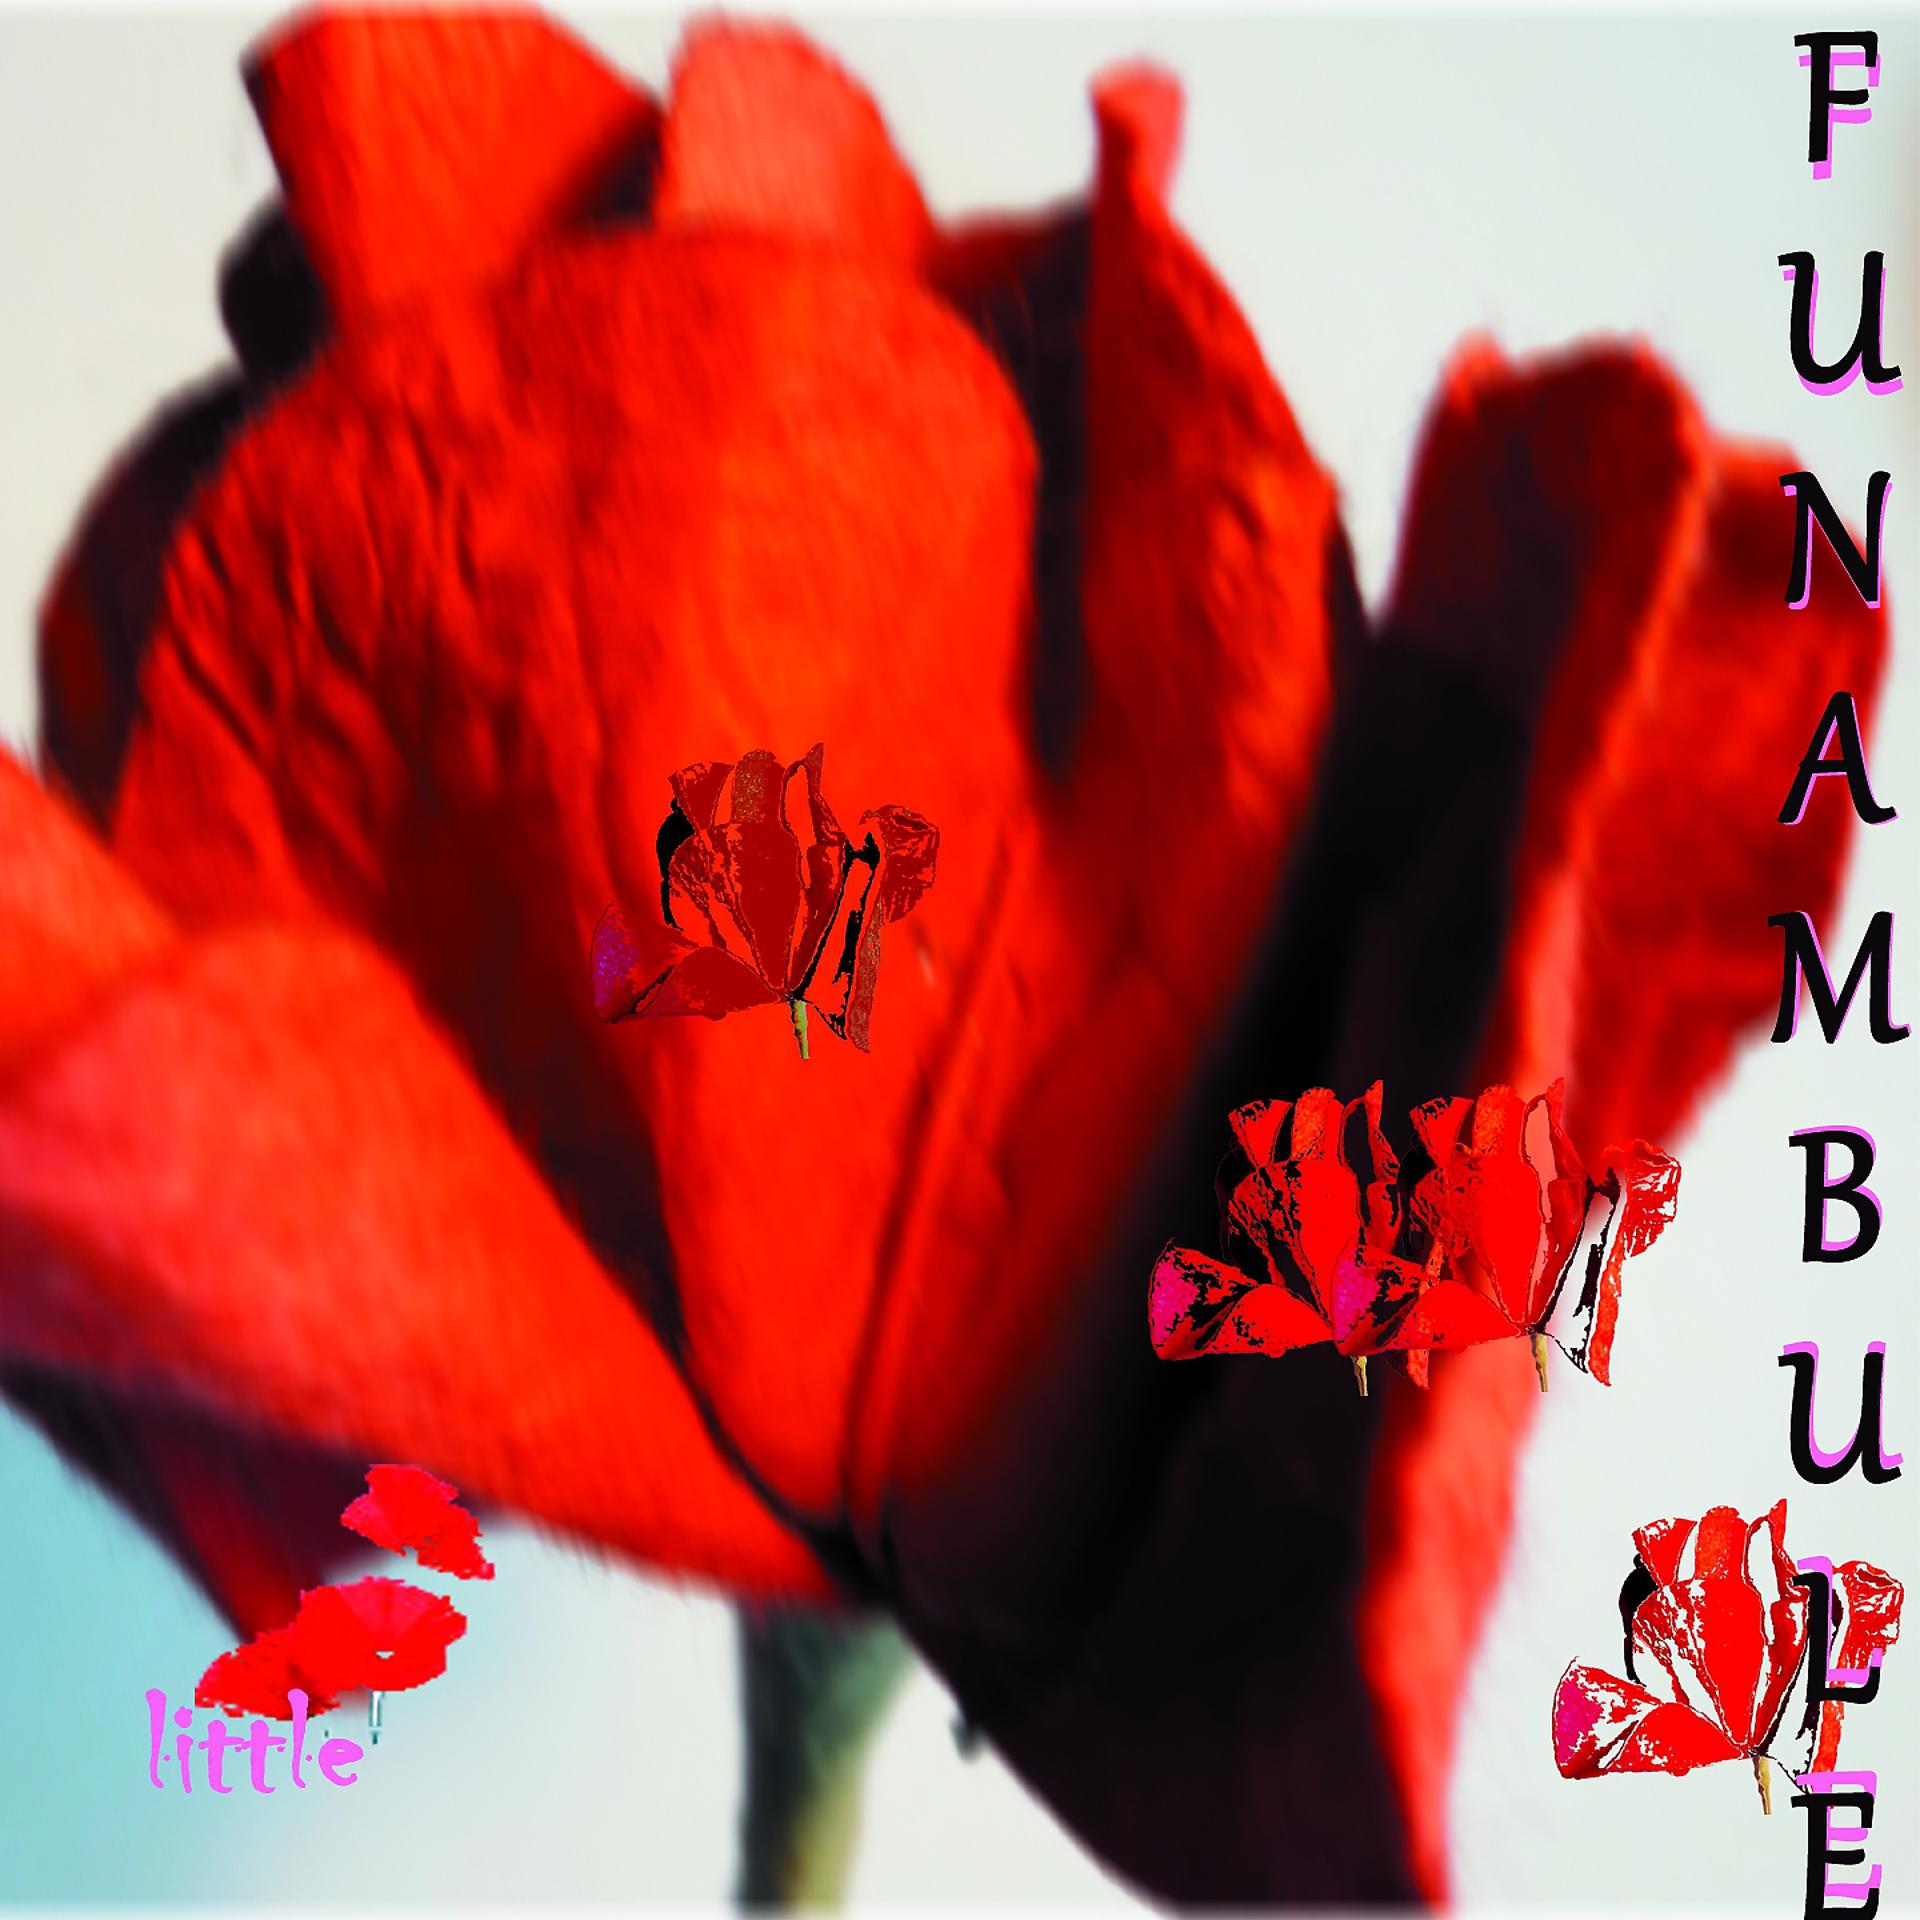 Постер альбома Funambule